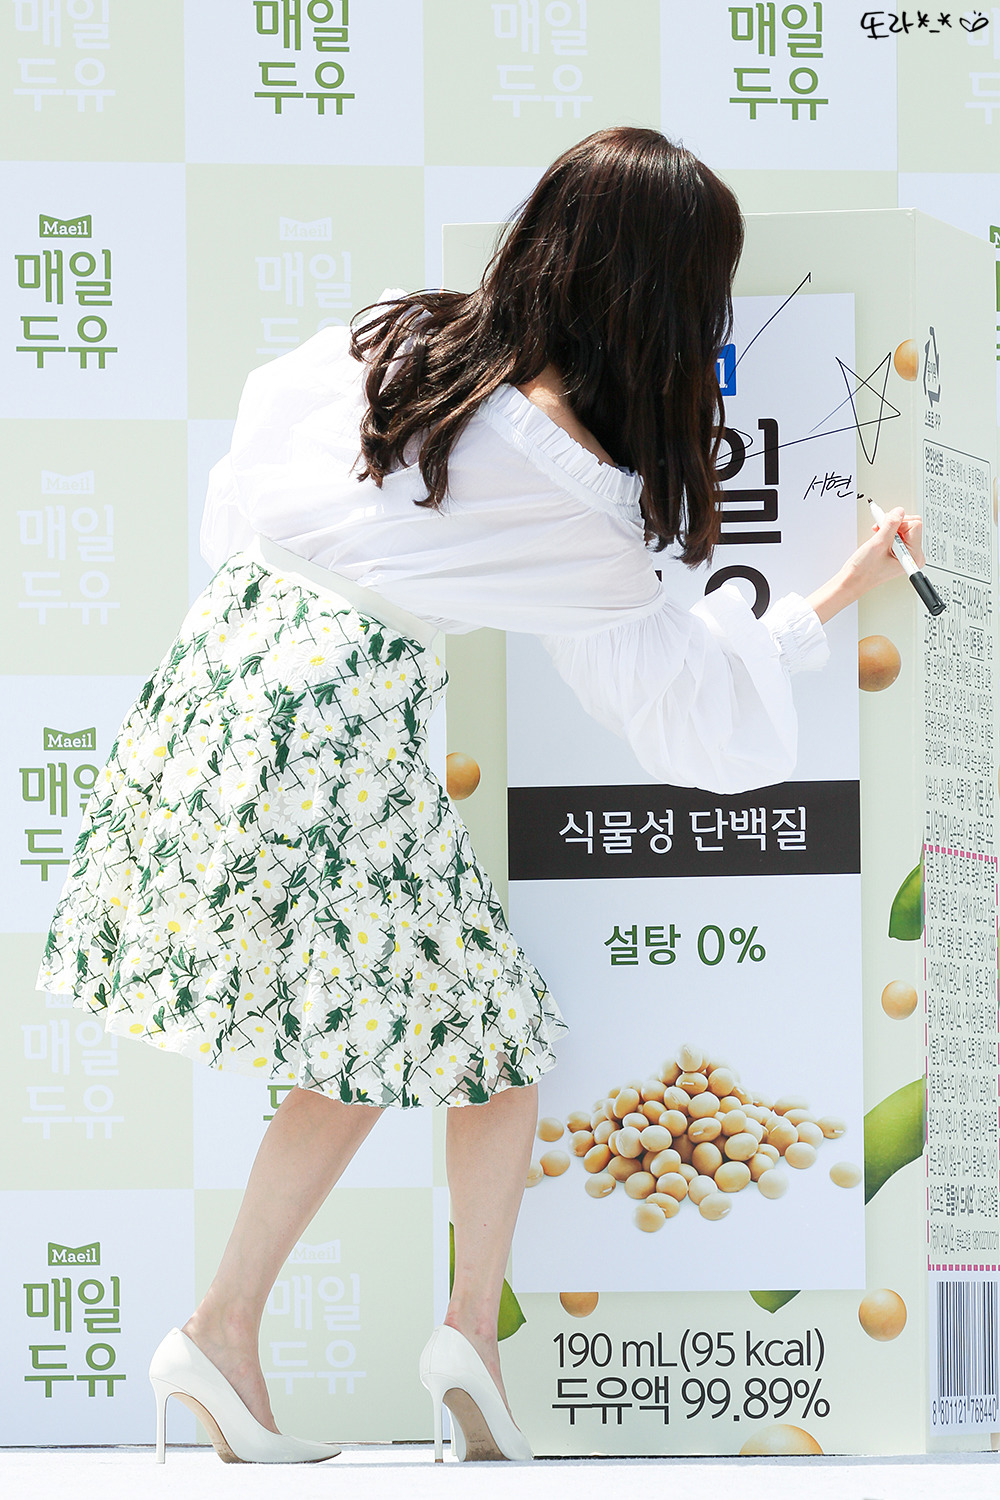  [PIC][03-06-2017]SeoHyun tham dự sự kiện “City Forestival - Maeil Duyou 'Confidence Diary'” vào chiều nay - Page 2 216EC4345933BBFA299A25